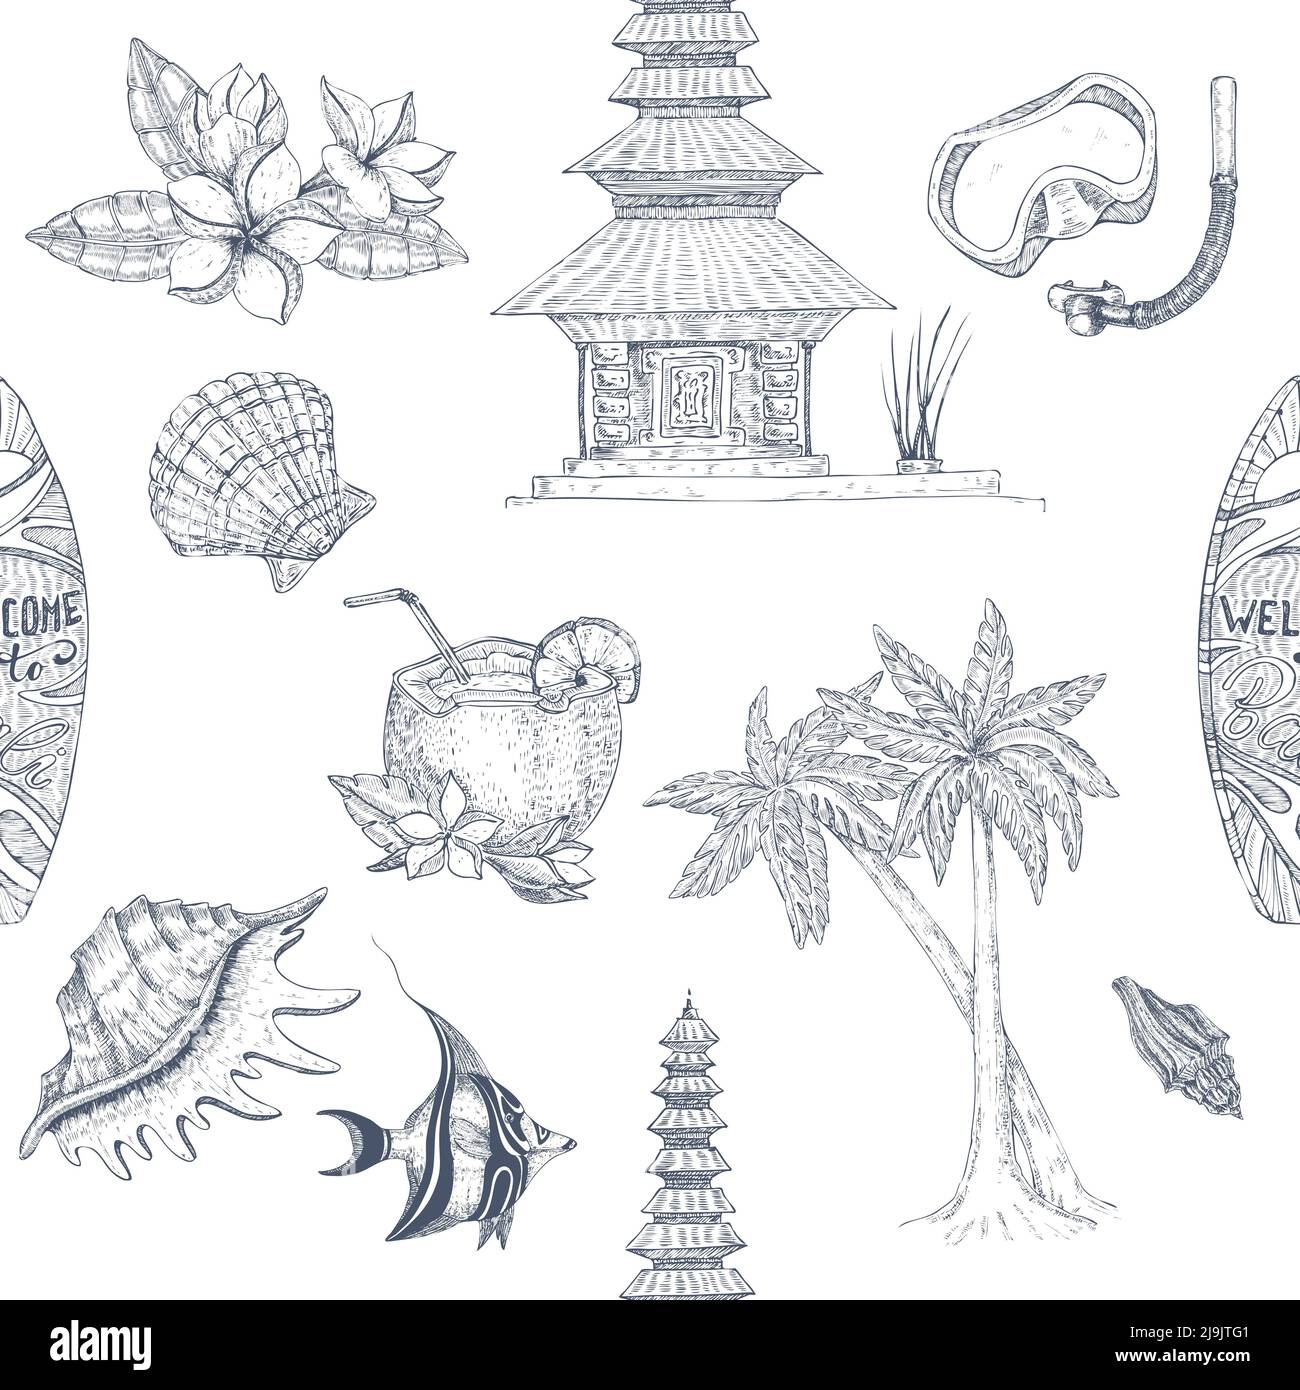 Cultura bali Banque d'images vectorielles - Page 2 - Alamy